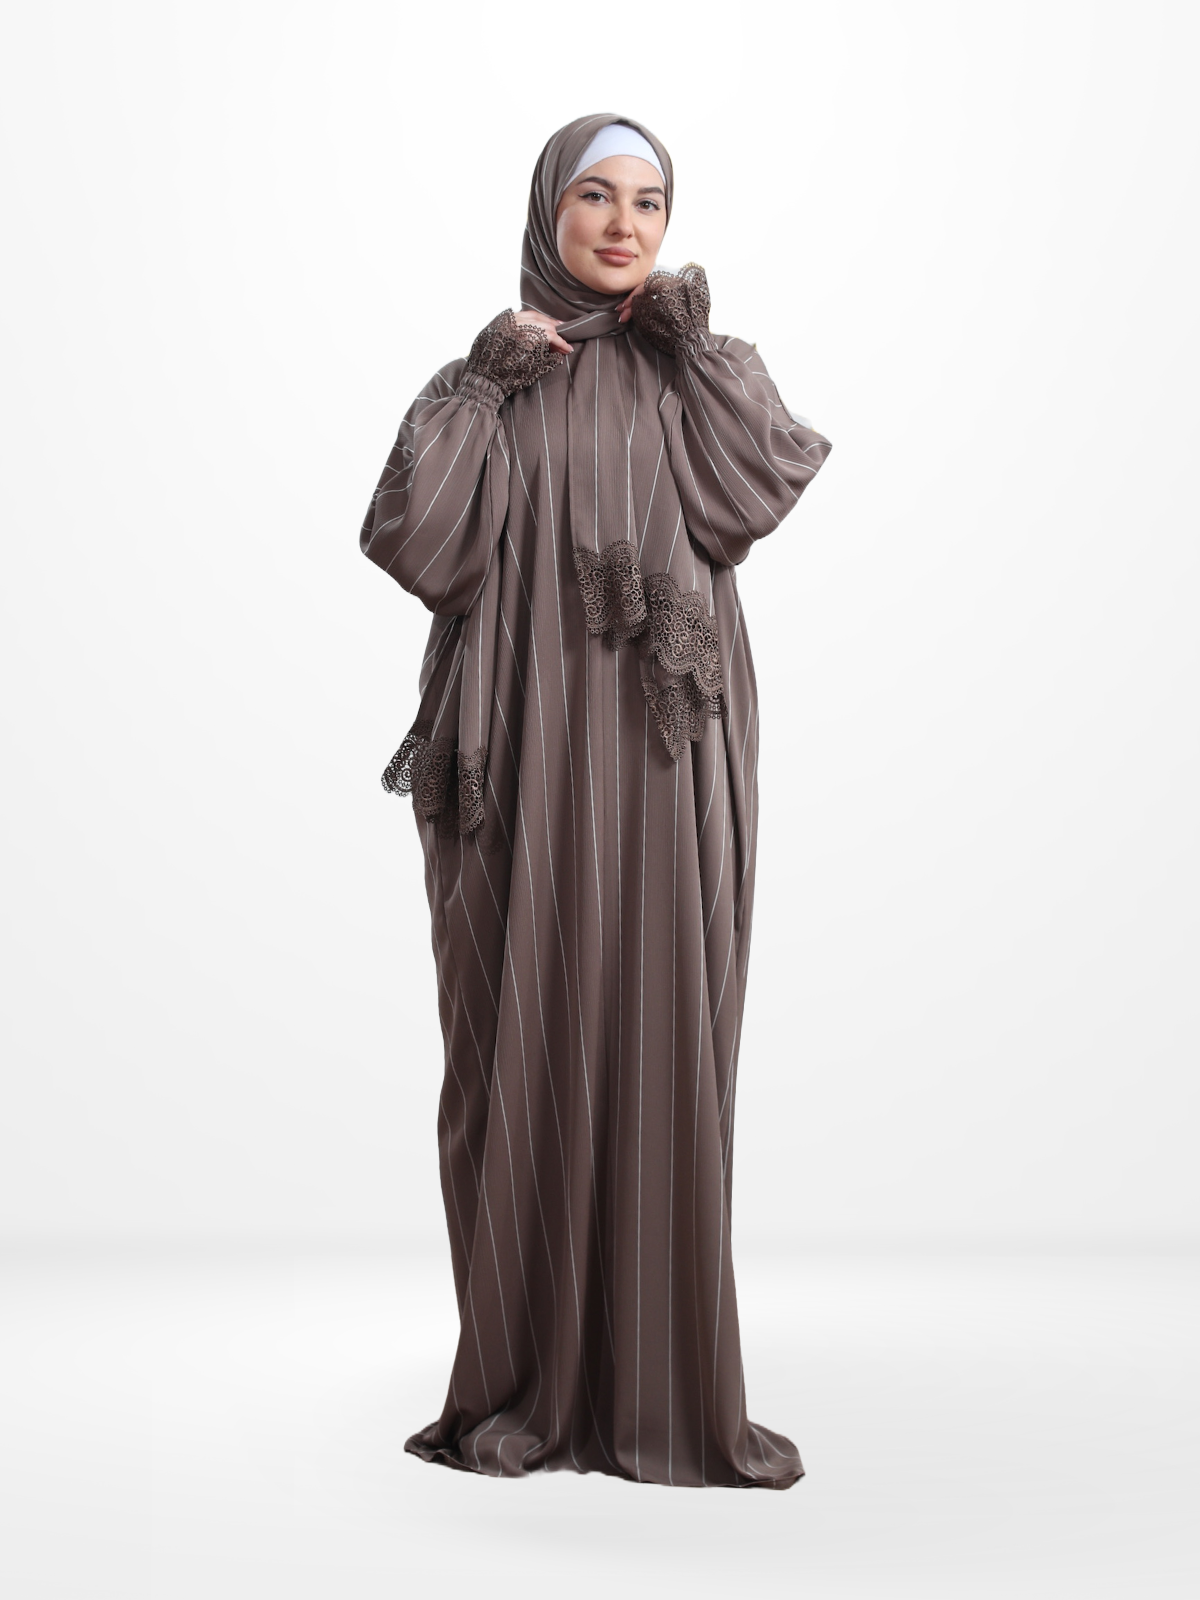 One-Piece Prayer Dress & Abaya with attached Hijab - Striped Crepe